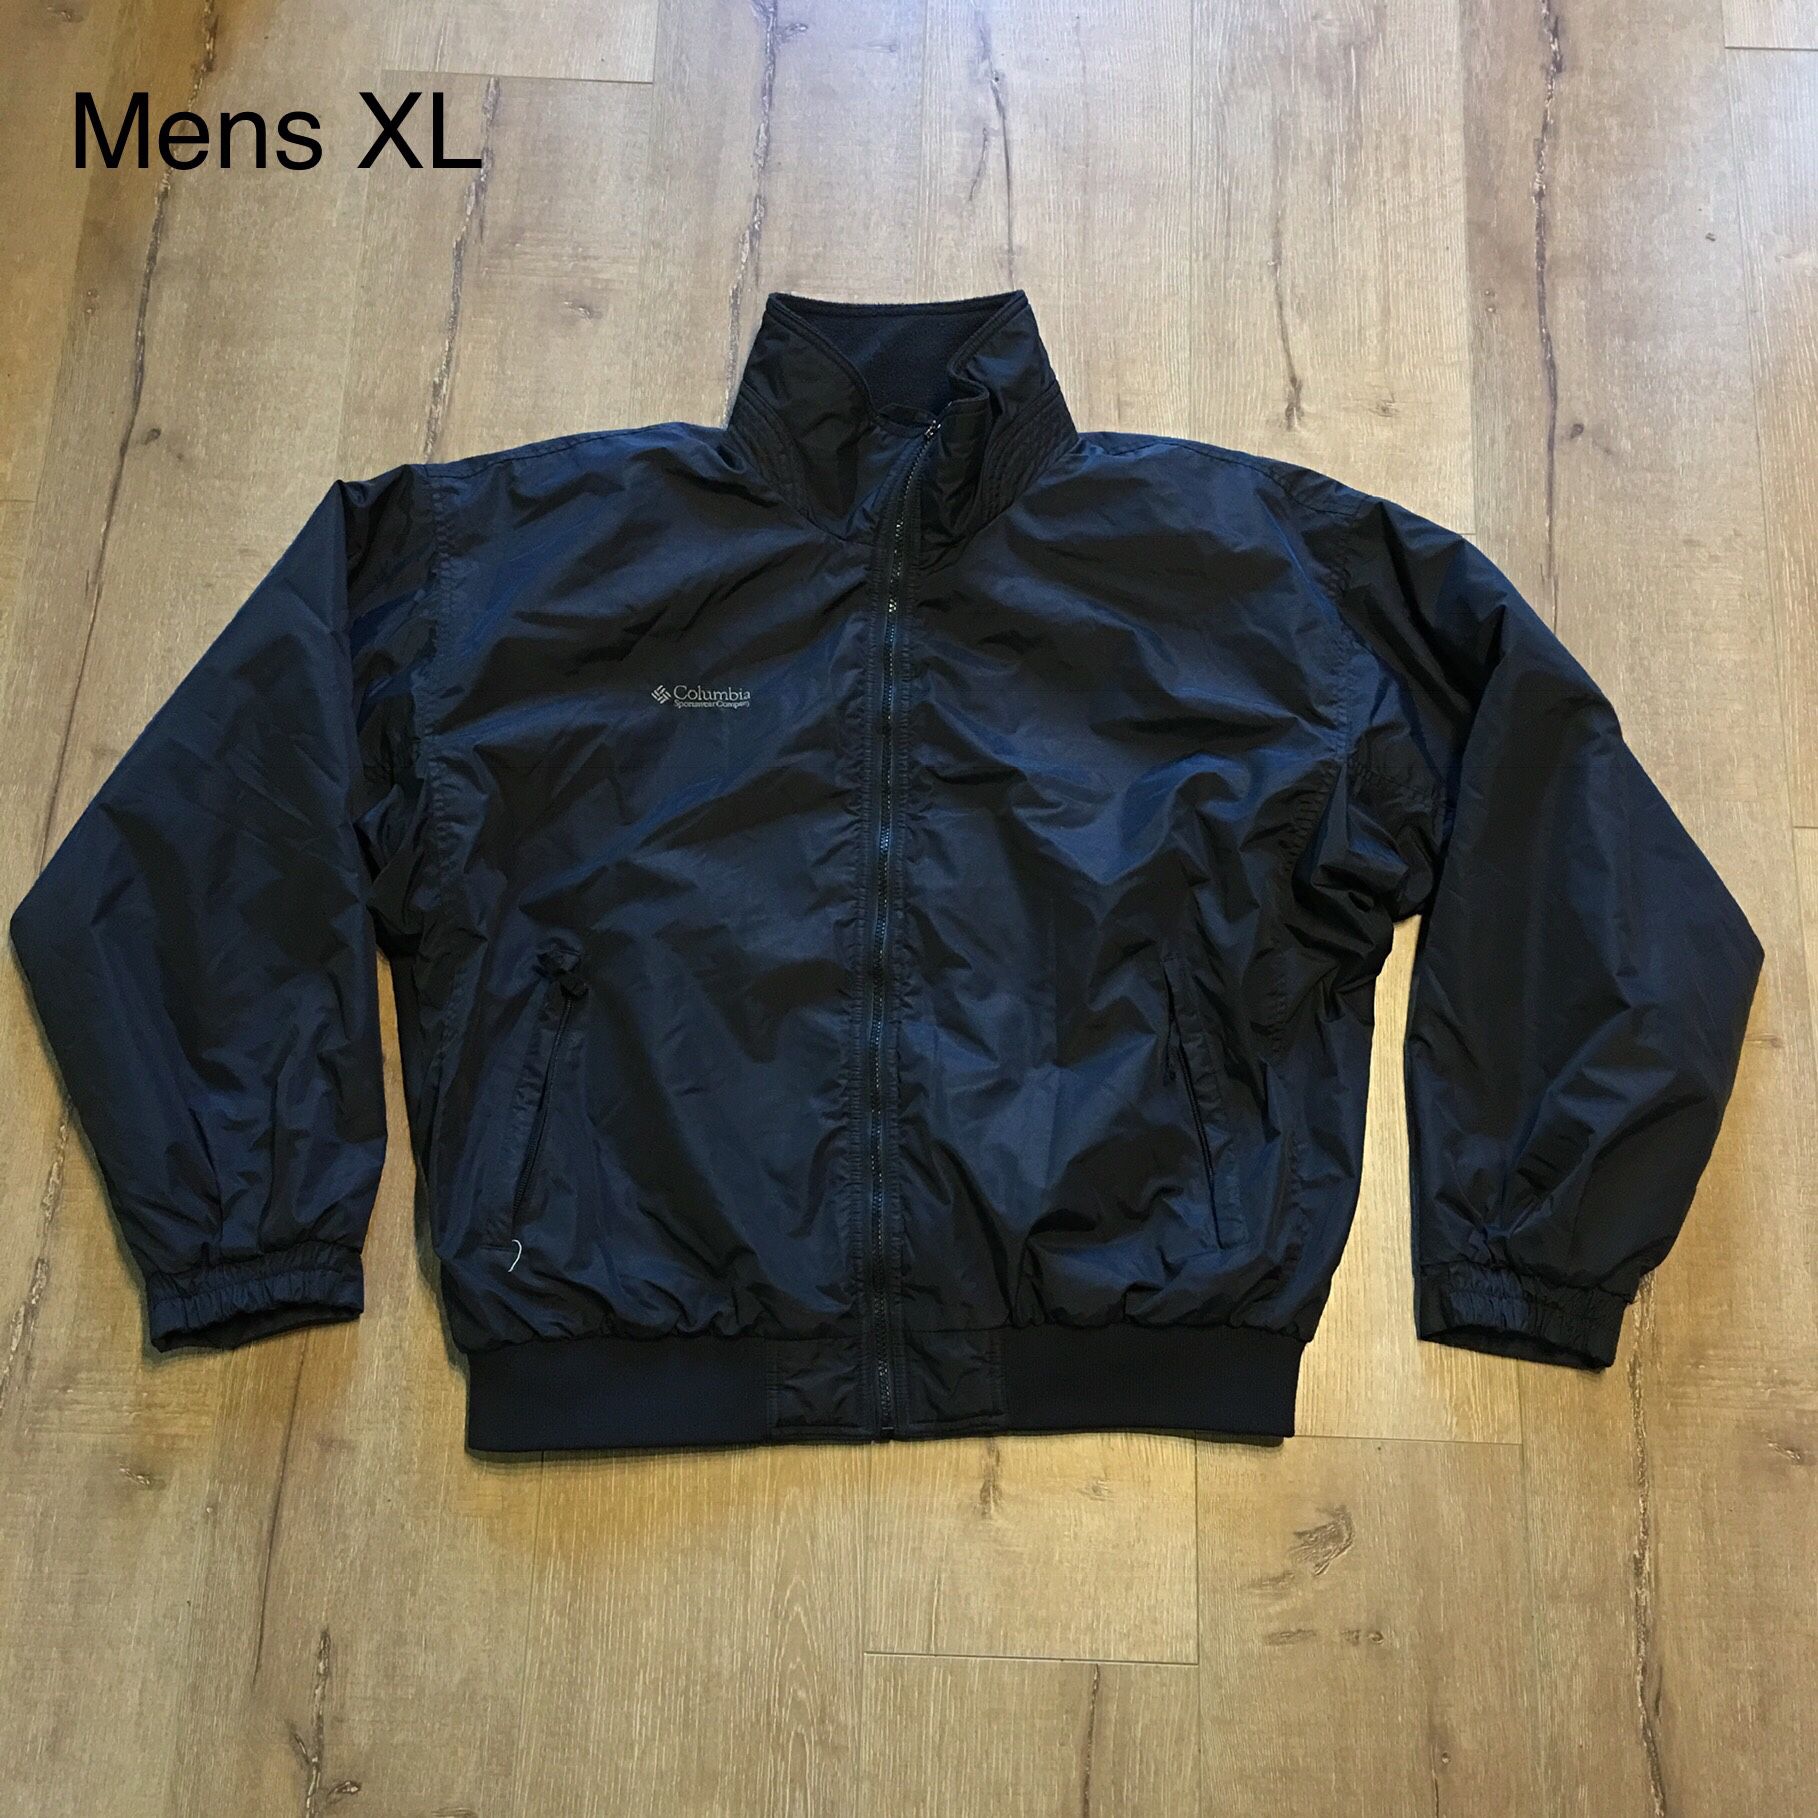 Mens XL - Vintage Columbia Bomber Lined Rain/Outdoor Jacket